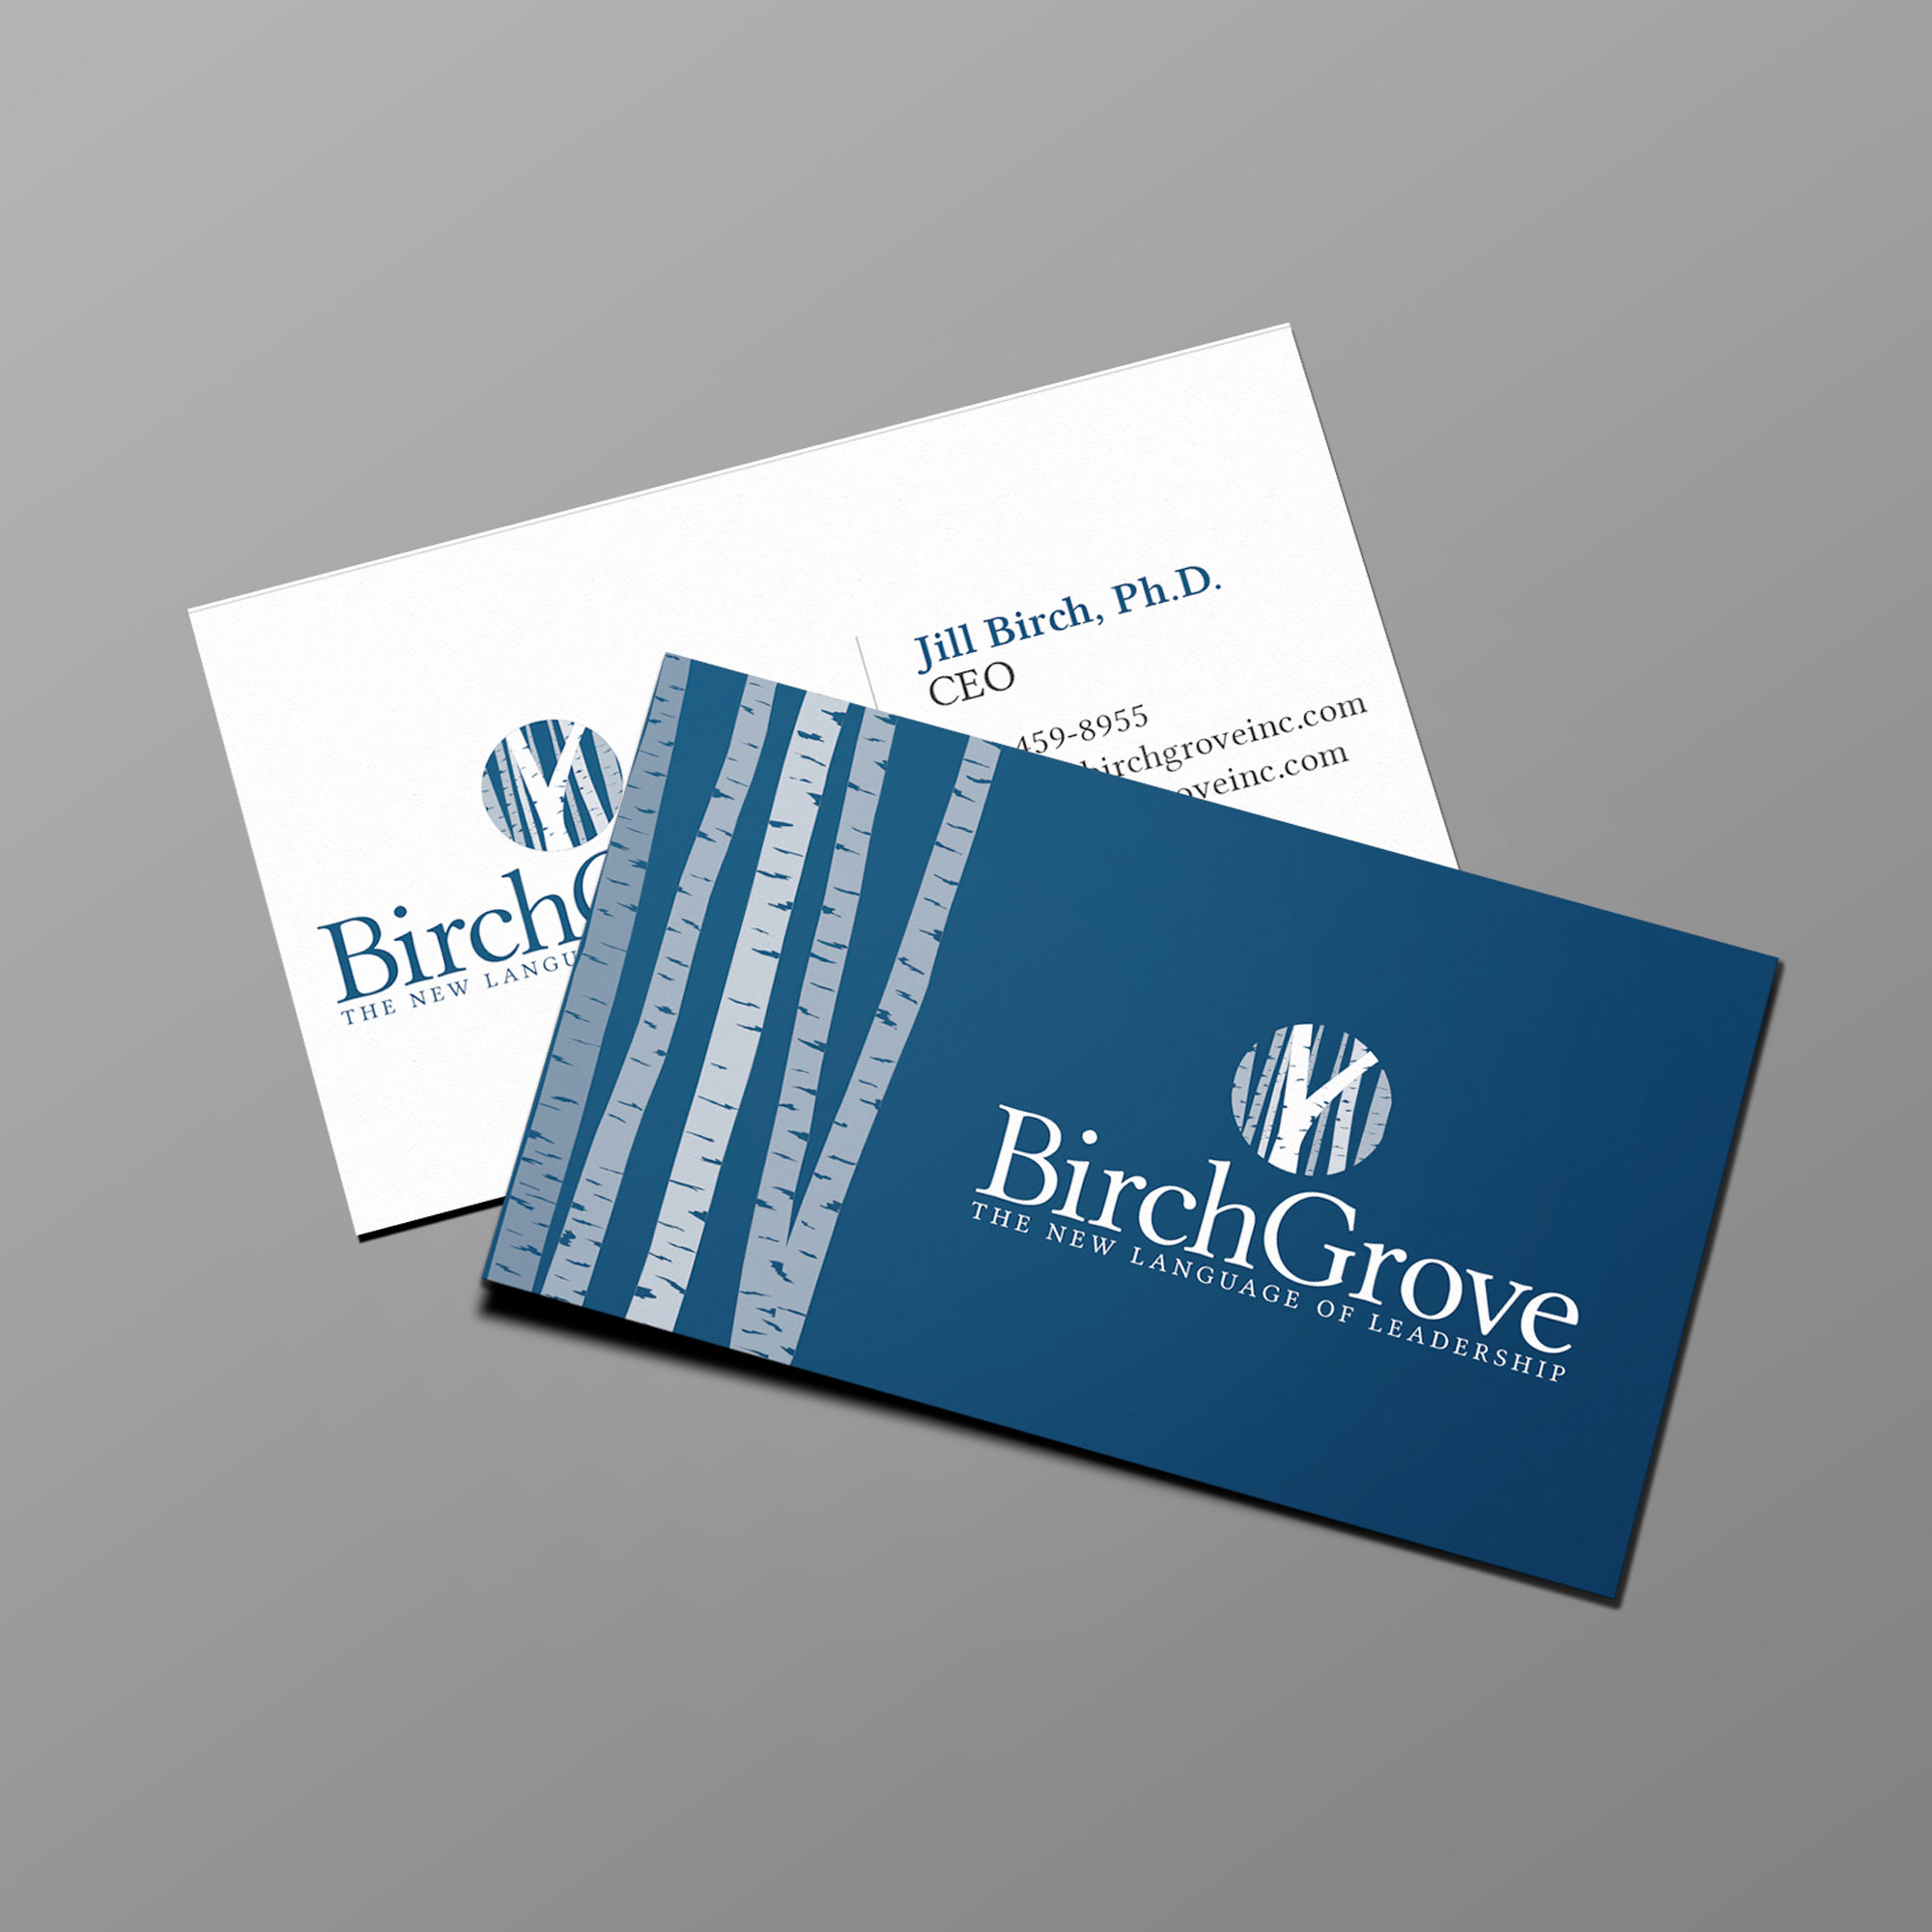 //nerdhousedesign.com/wp-content/uploads/2017/05/nhd_birchgrove_cards.jpg